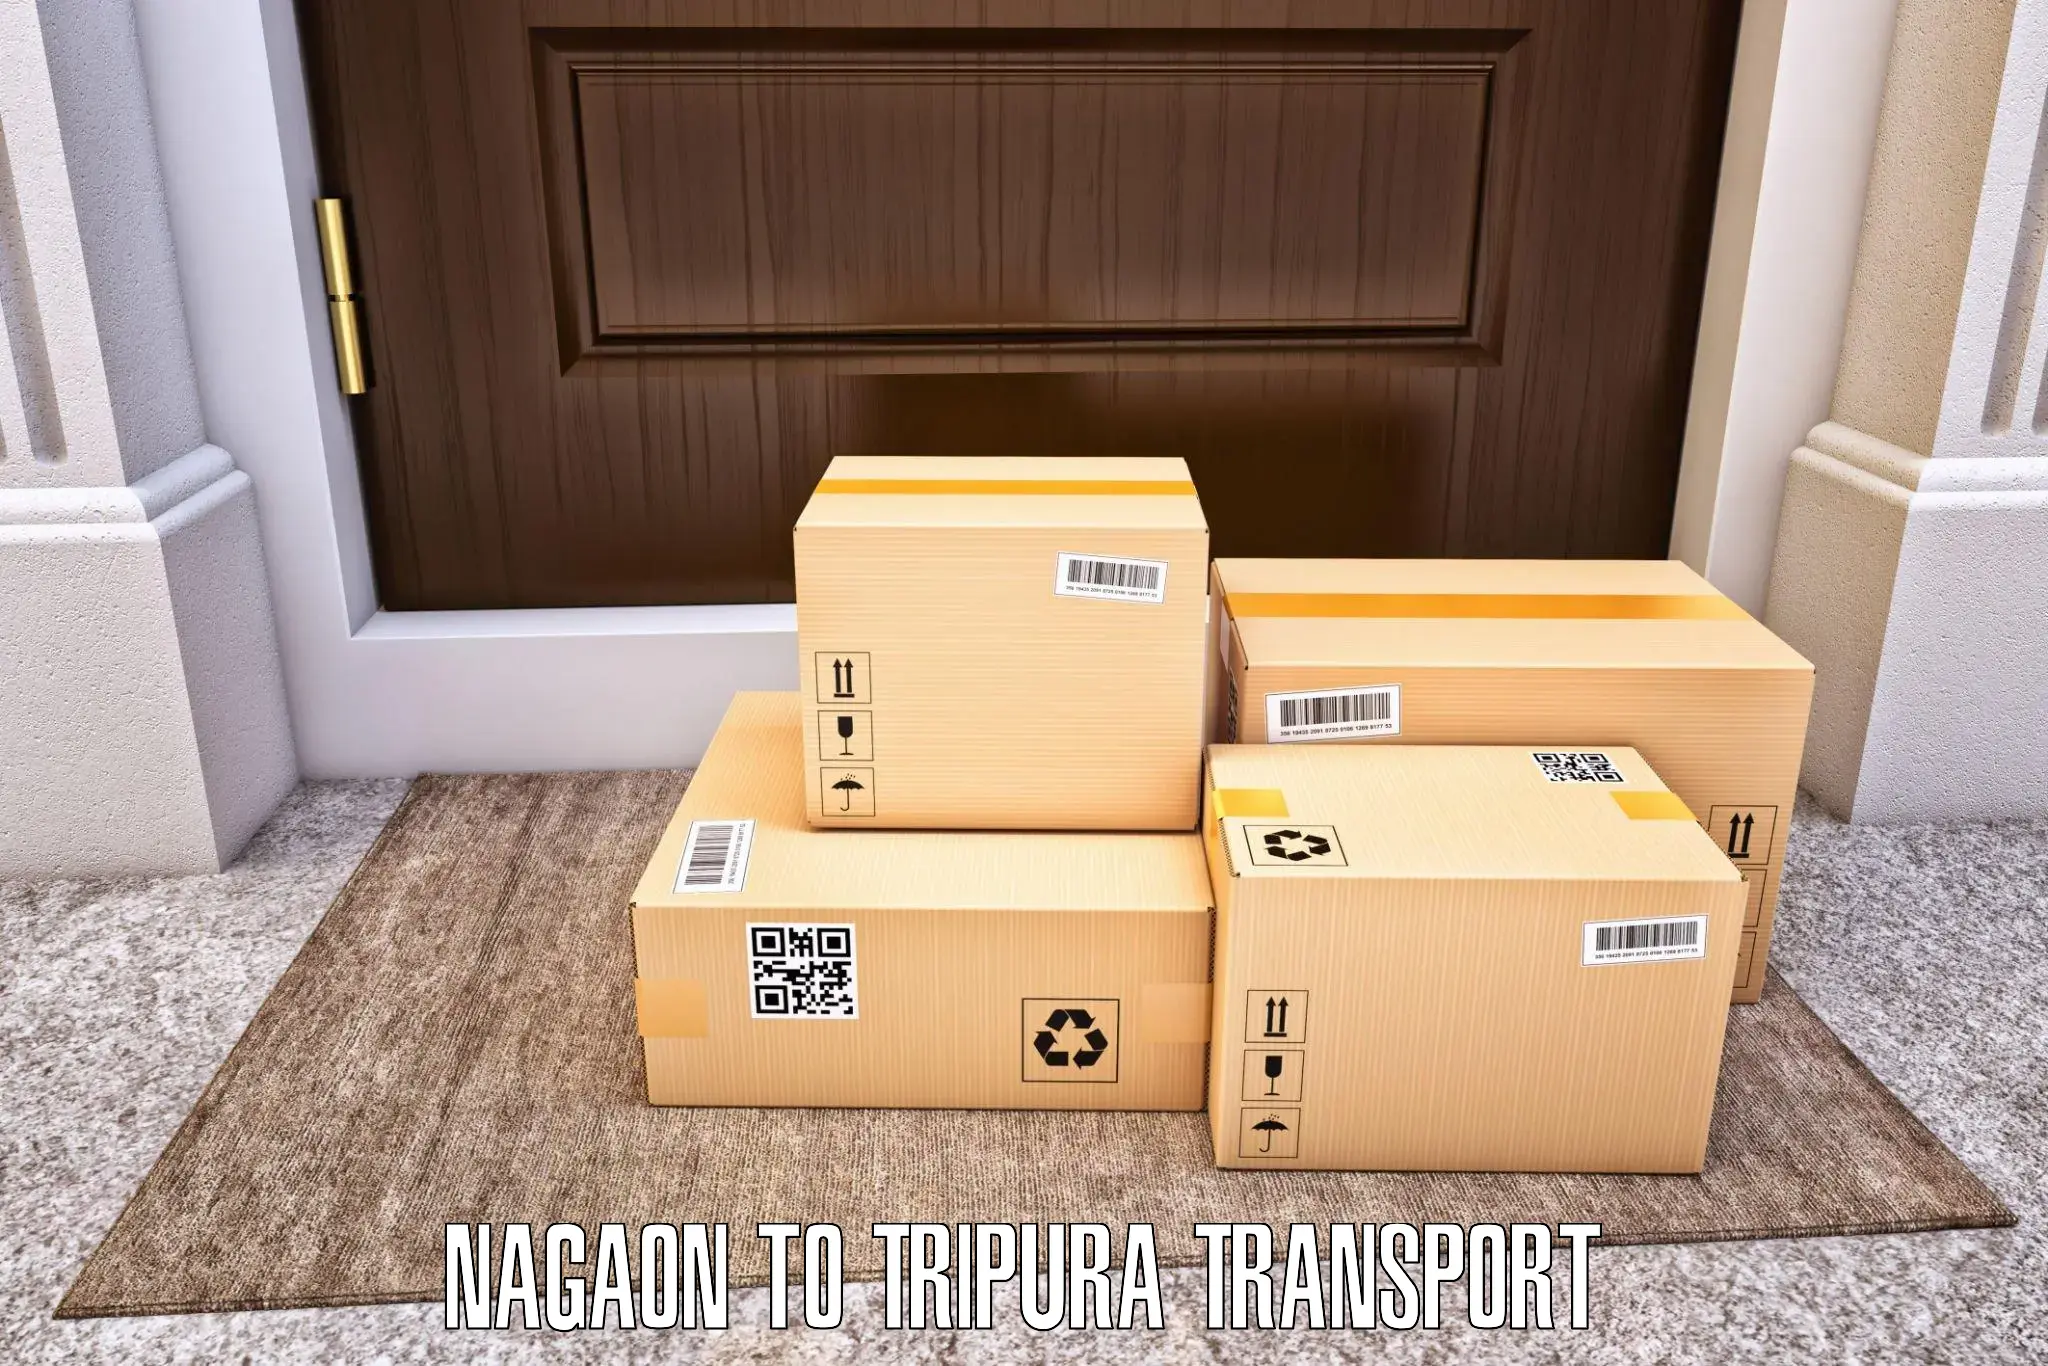 Delivery service Nagaon to Agartala